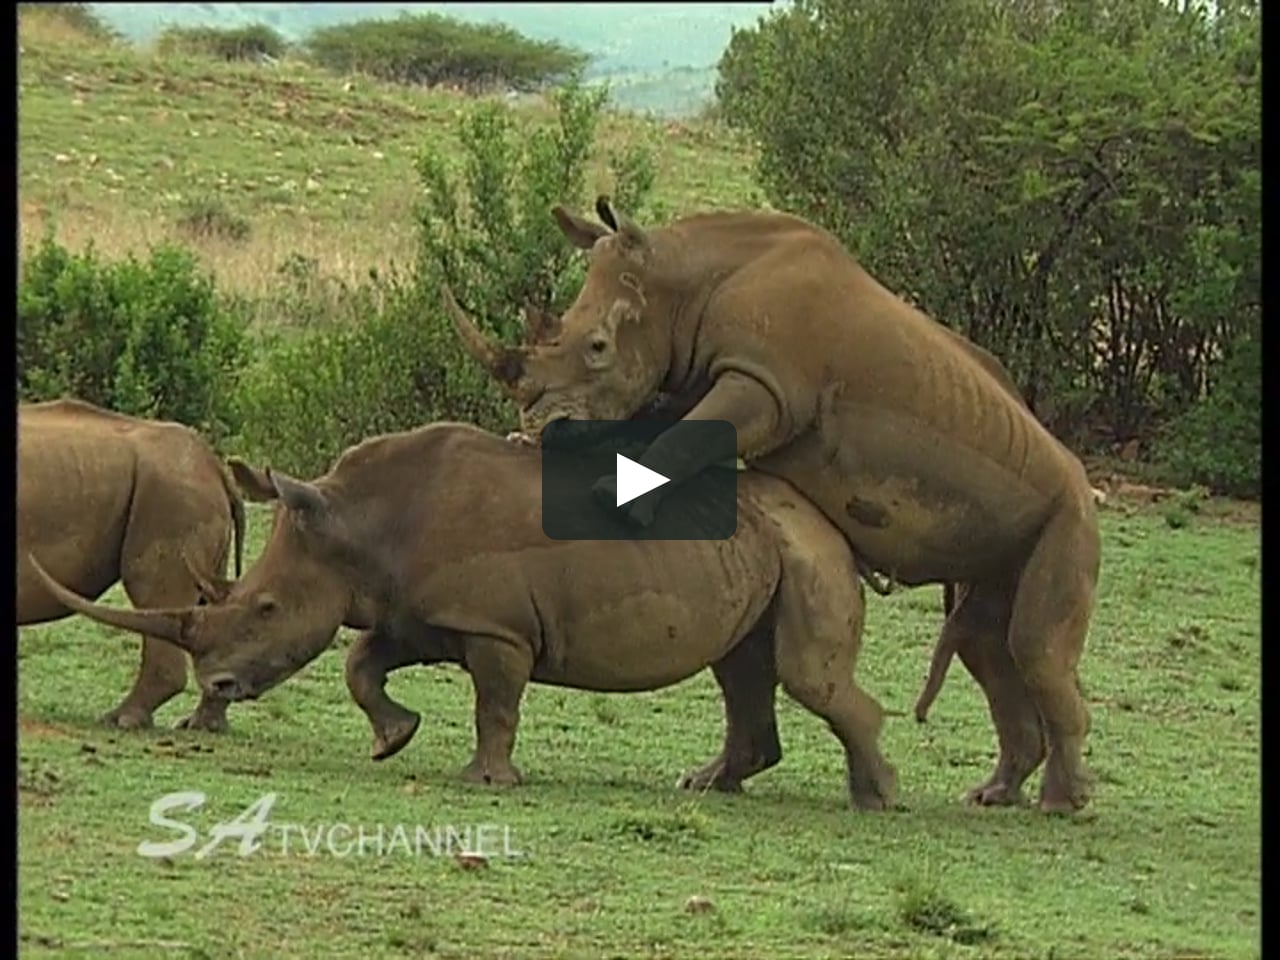 Best Rhino Mating Video - Large 540p on Vimeo